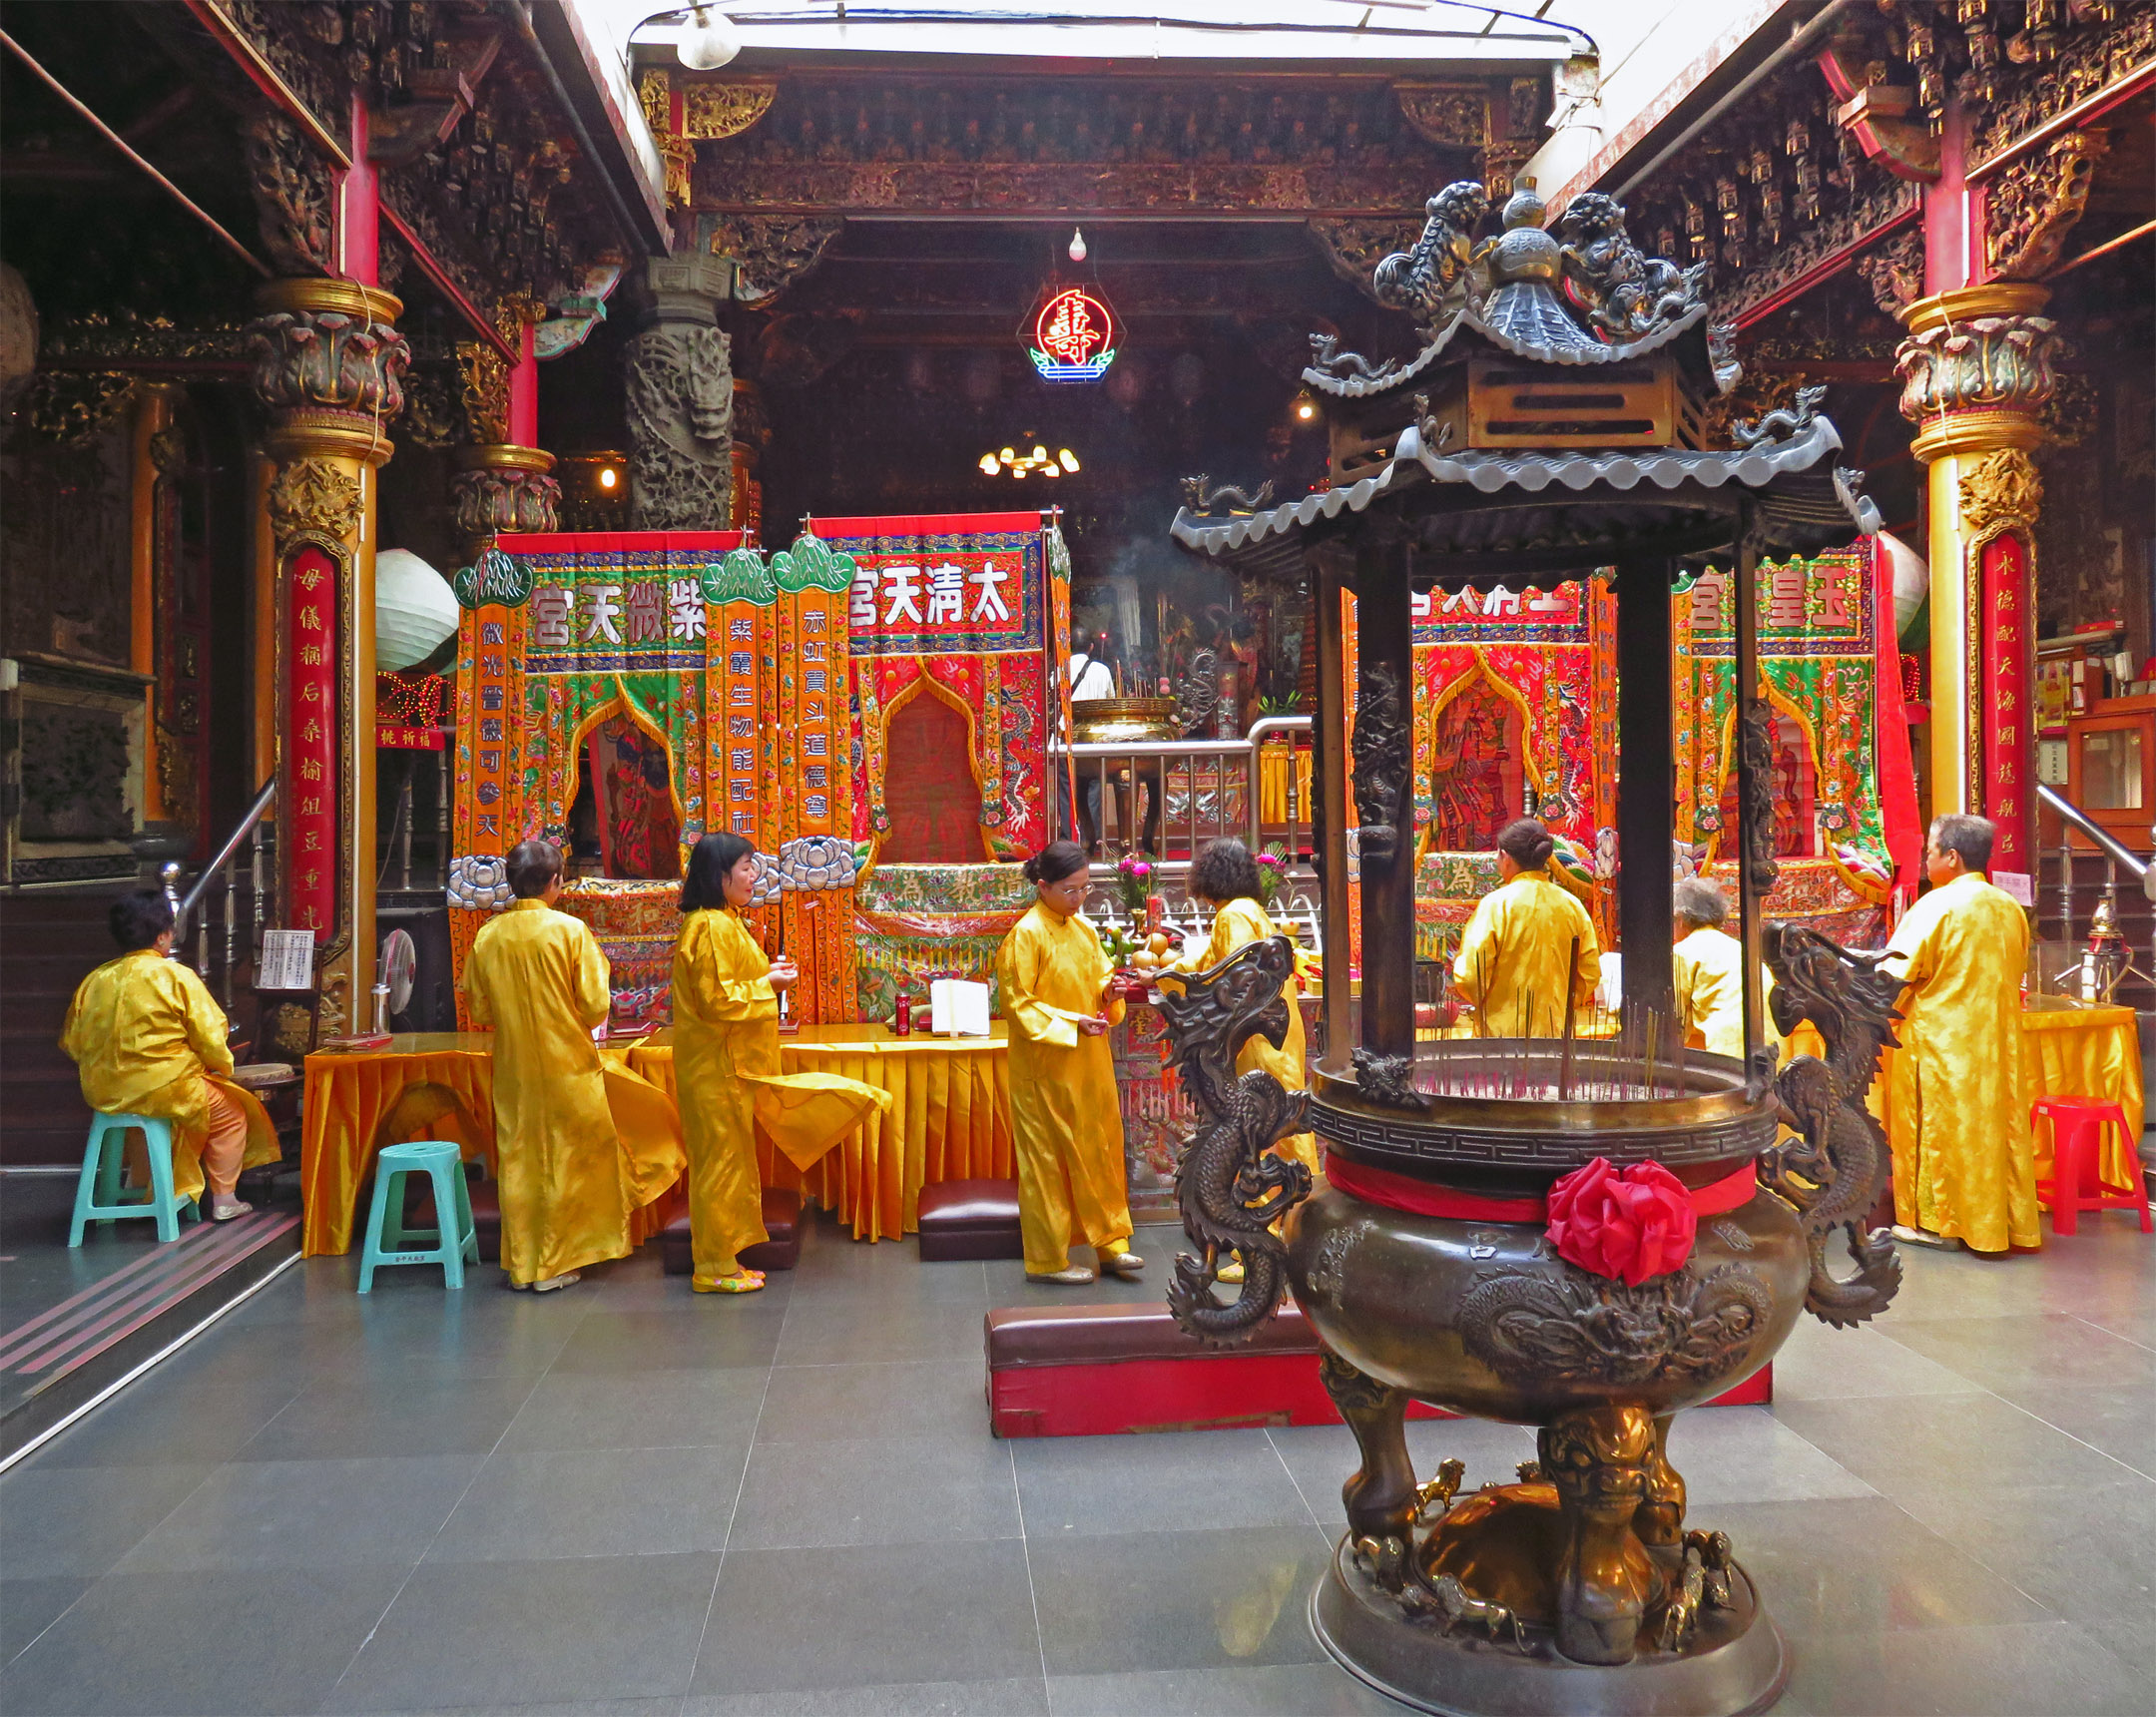 6. The Grand Matsu Temple in Tainan